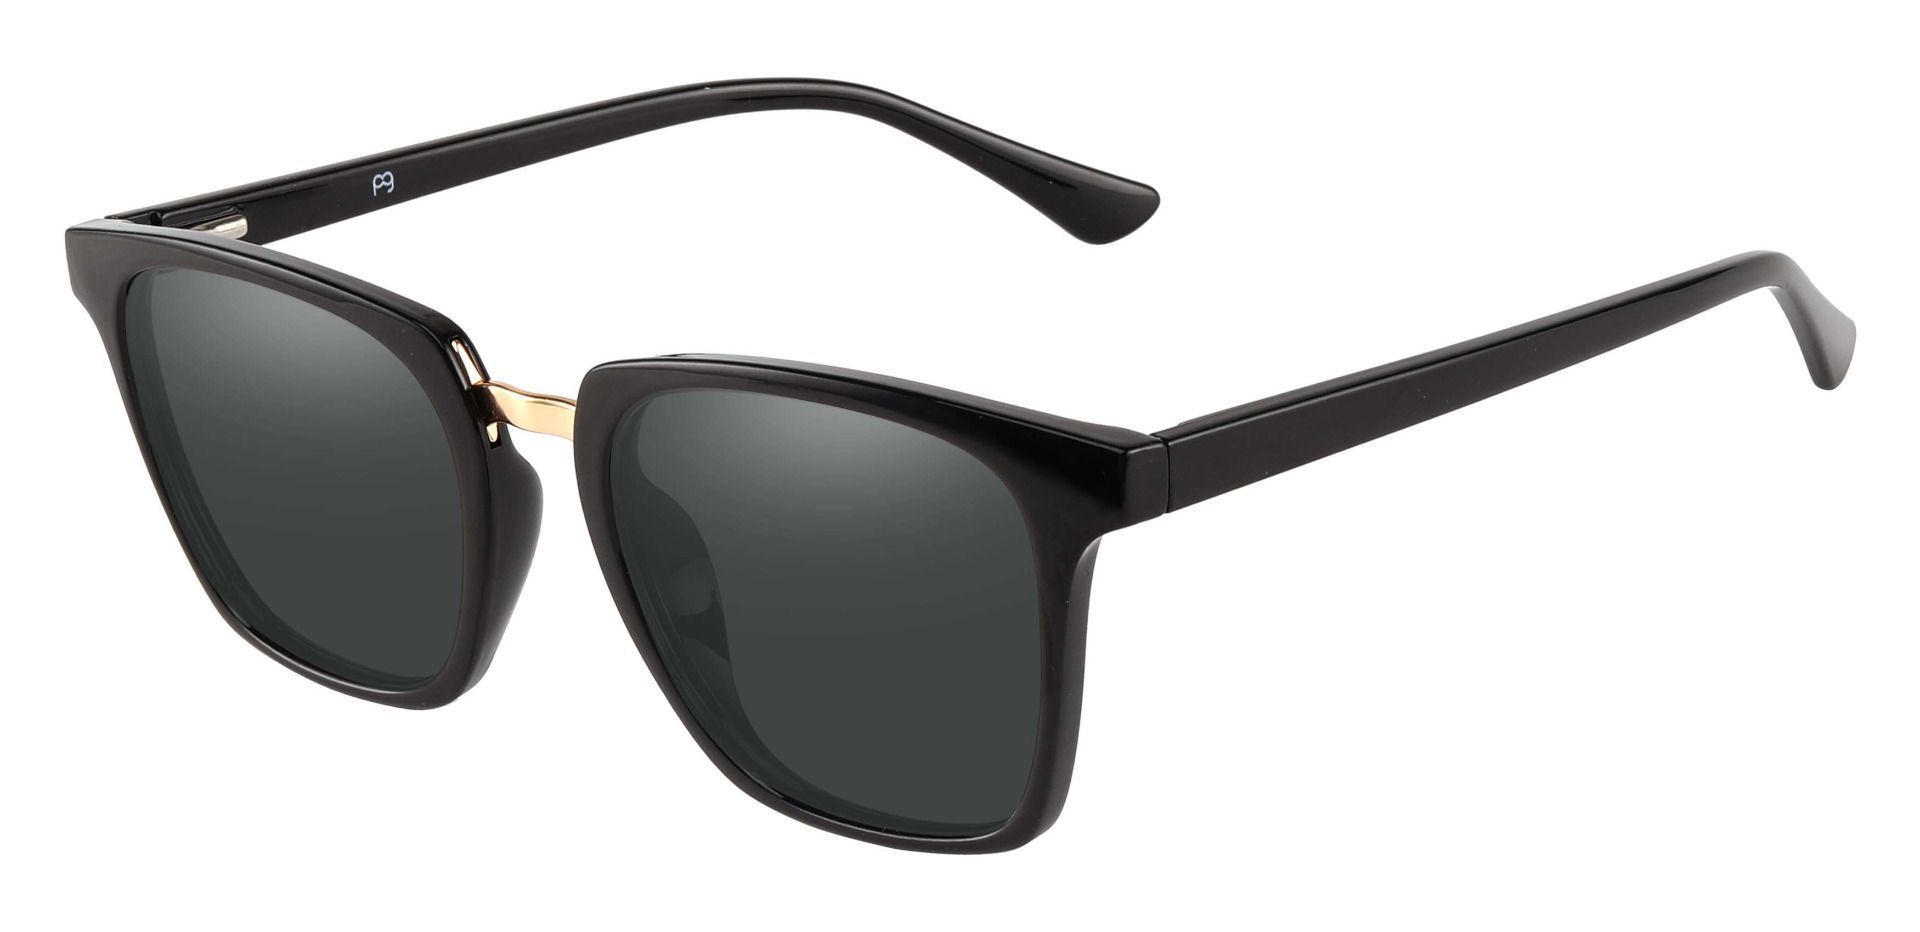 Delta Square Reading Sunglasses - Black Frame With Gray Lenses